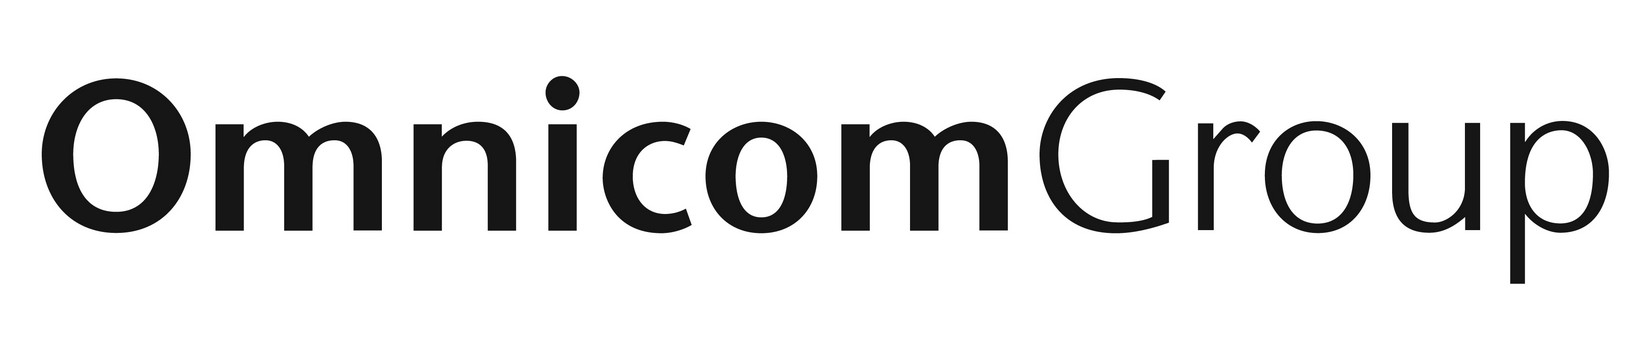 omnicom_group_logo.jpg